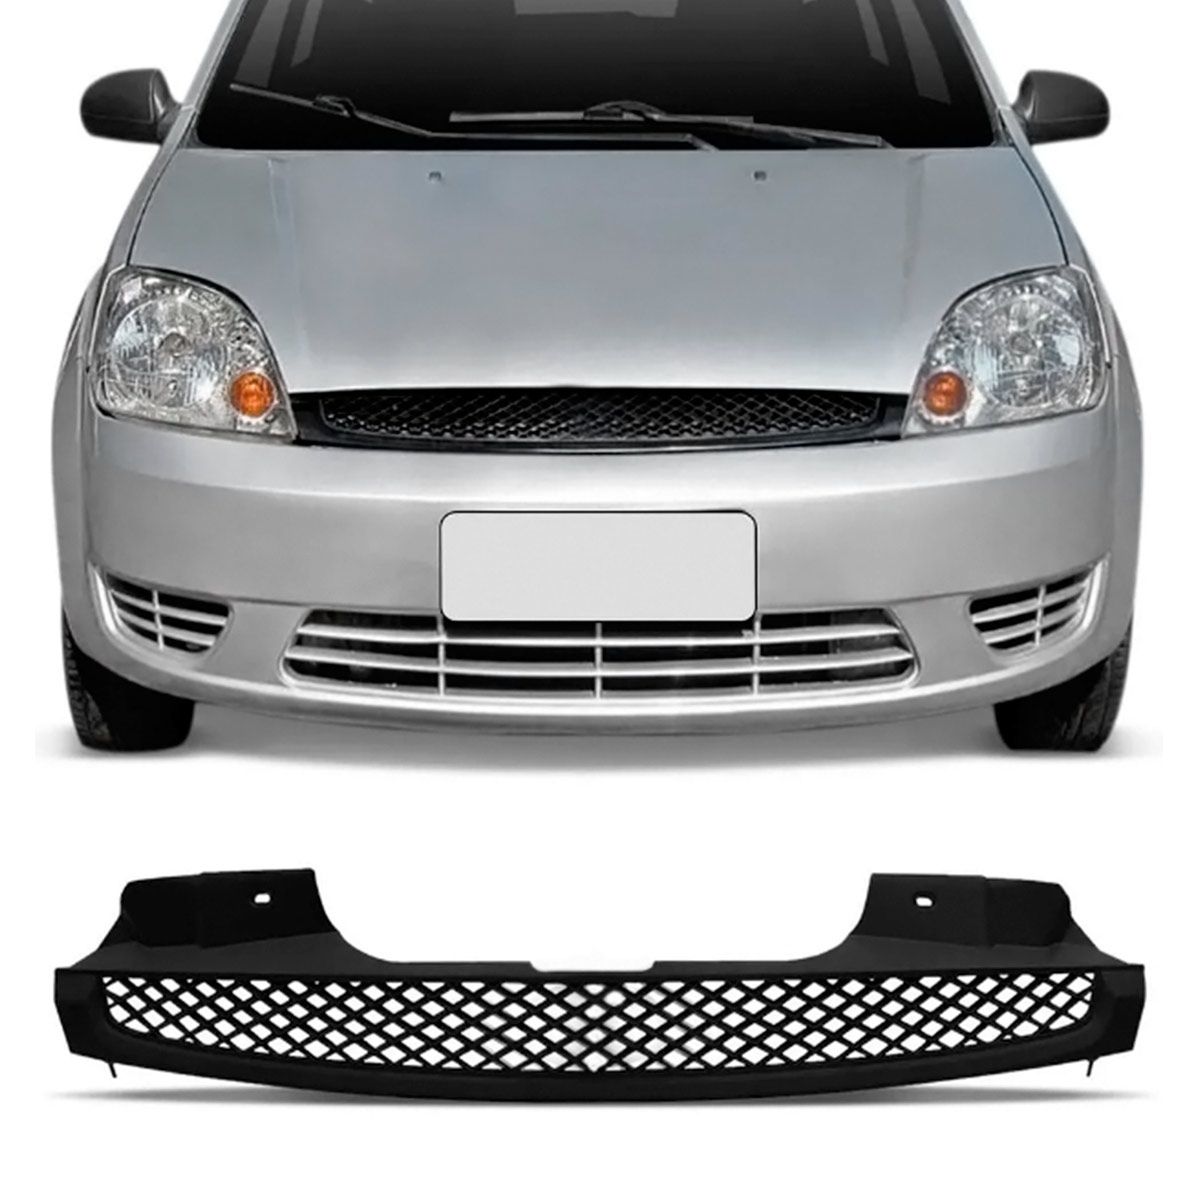 Grade Dianteira KJ Ford Fiesta Hatch/Sedan 2002 a 2007 Sem Emblema